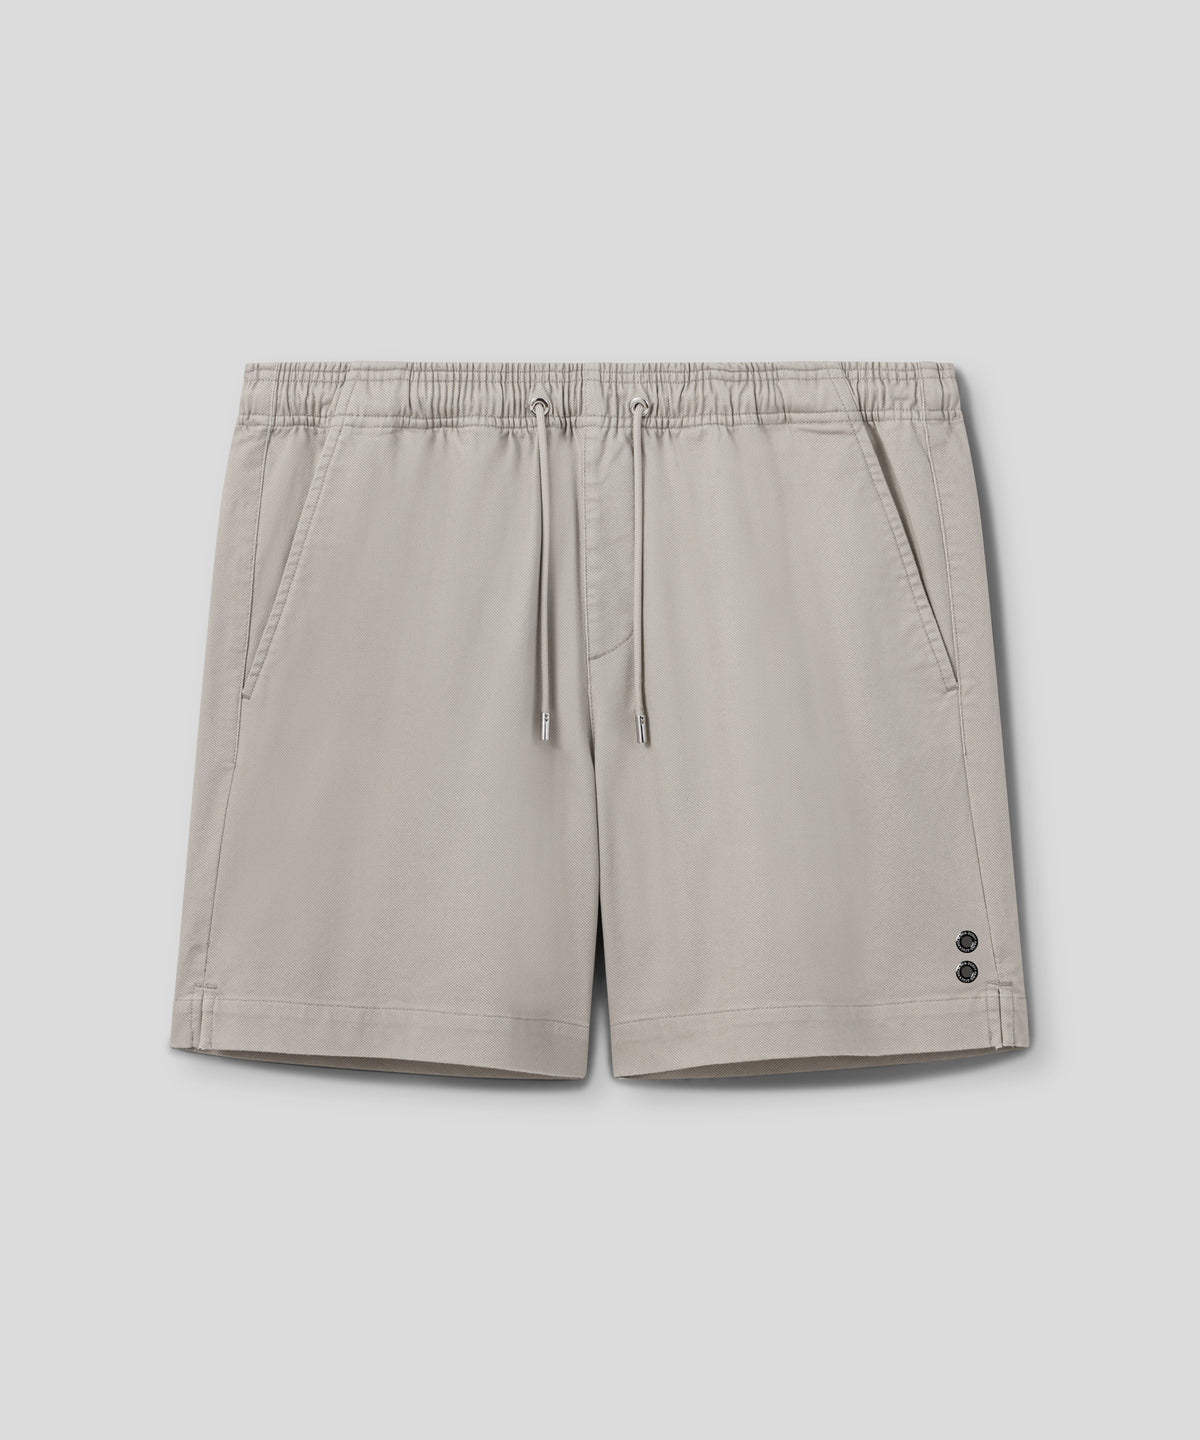 Chino Sports Shorts: Taupe Grey